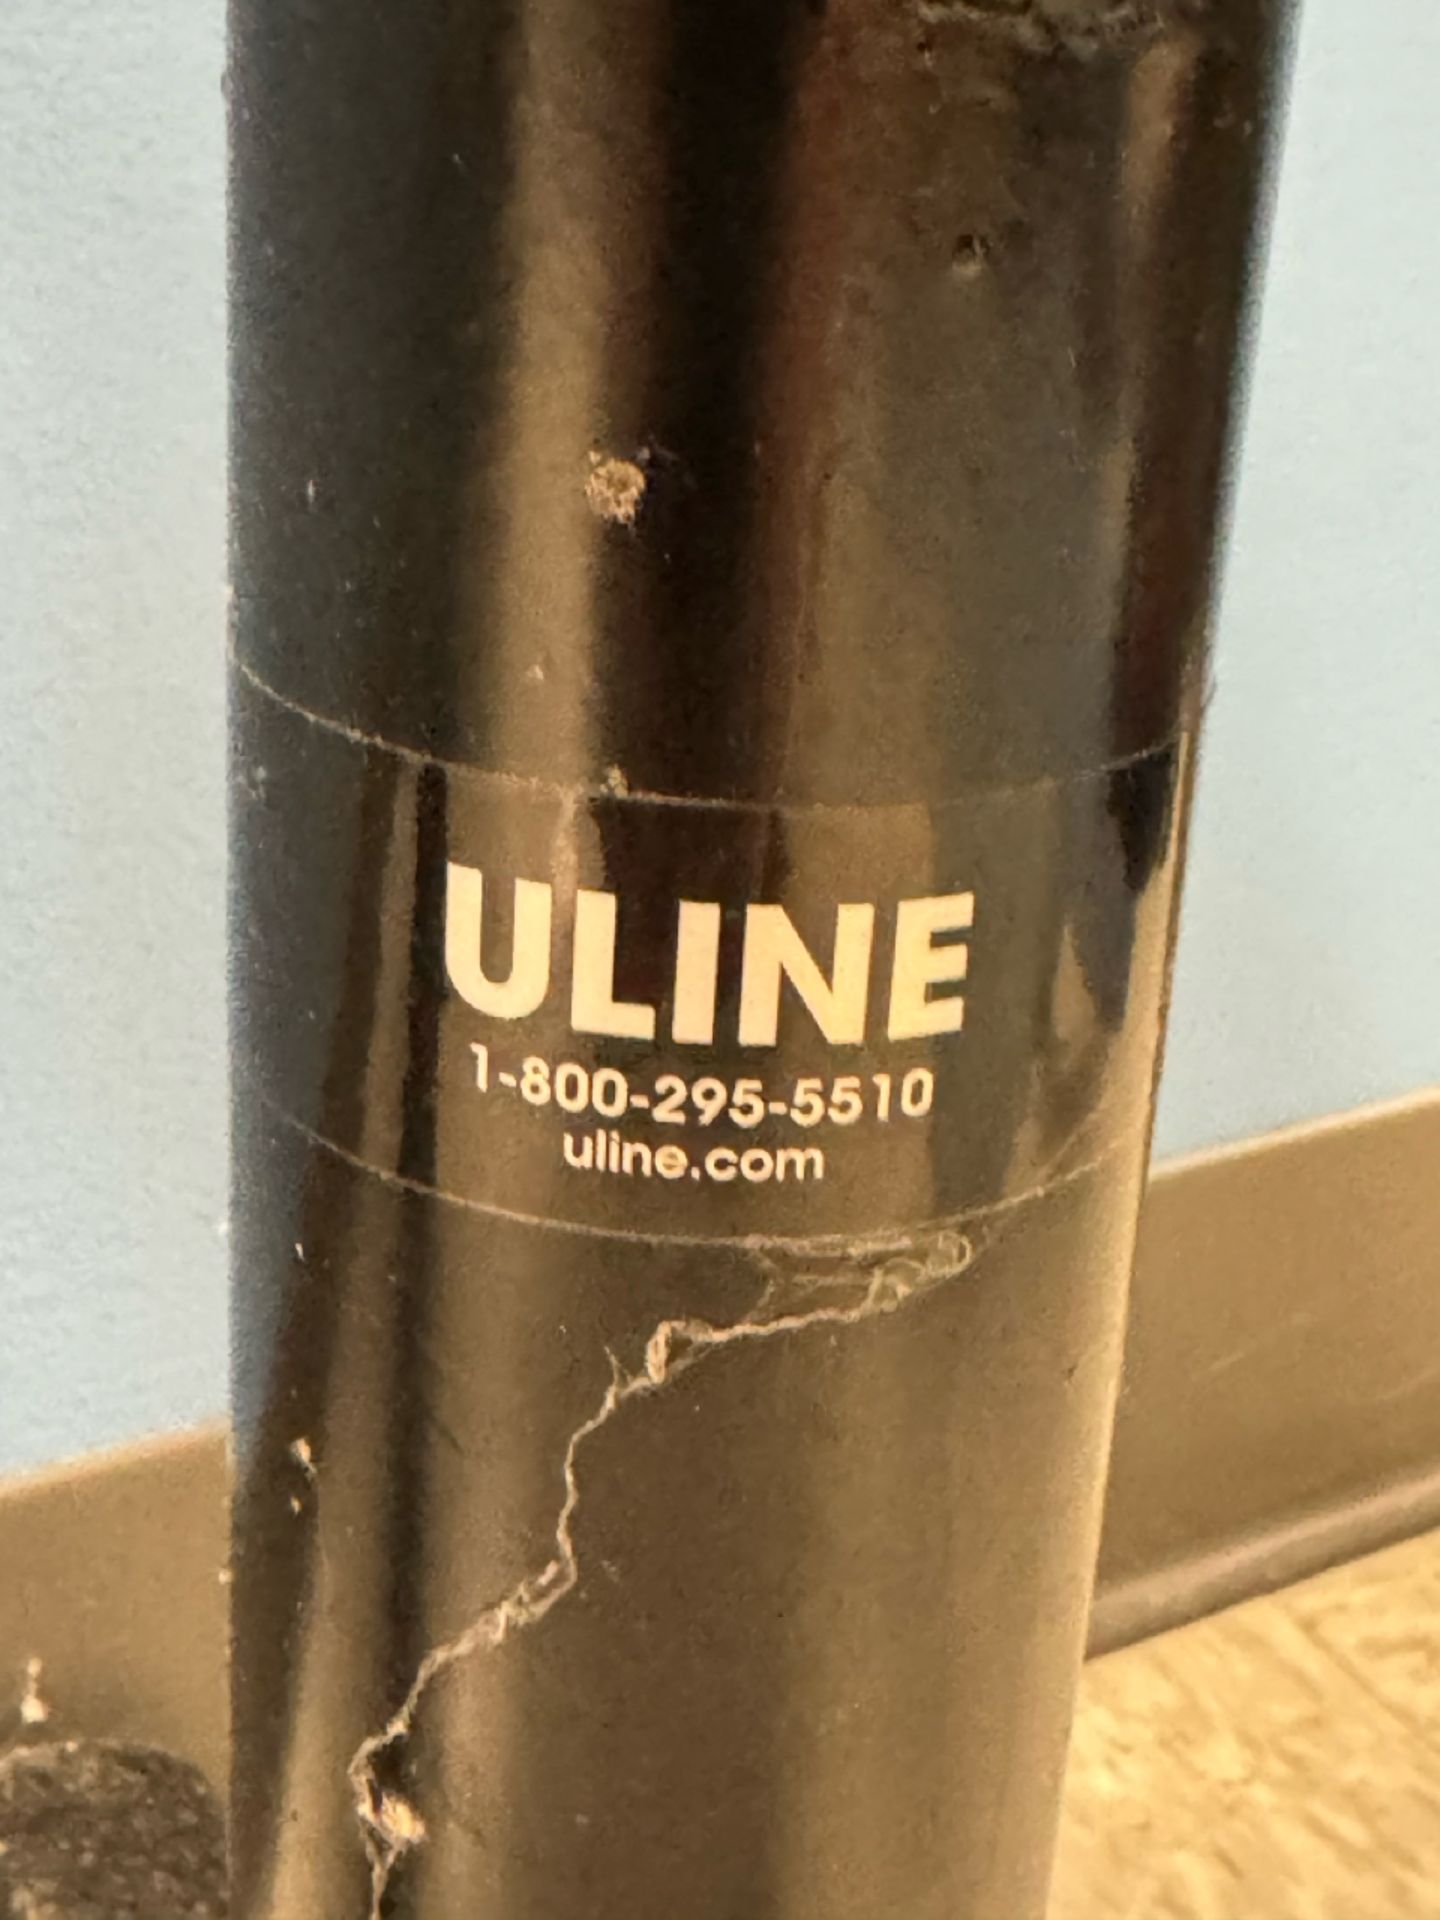 Uline Work Bench - Image 2 of 2